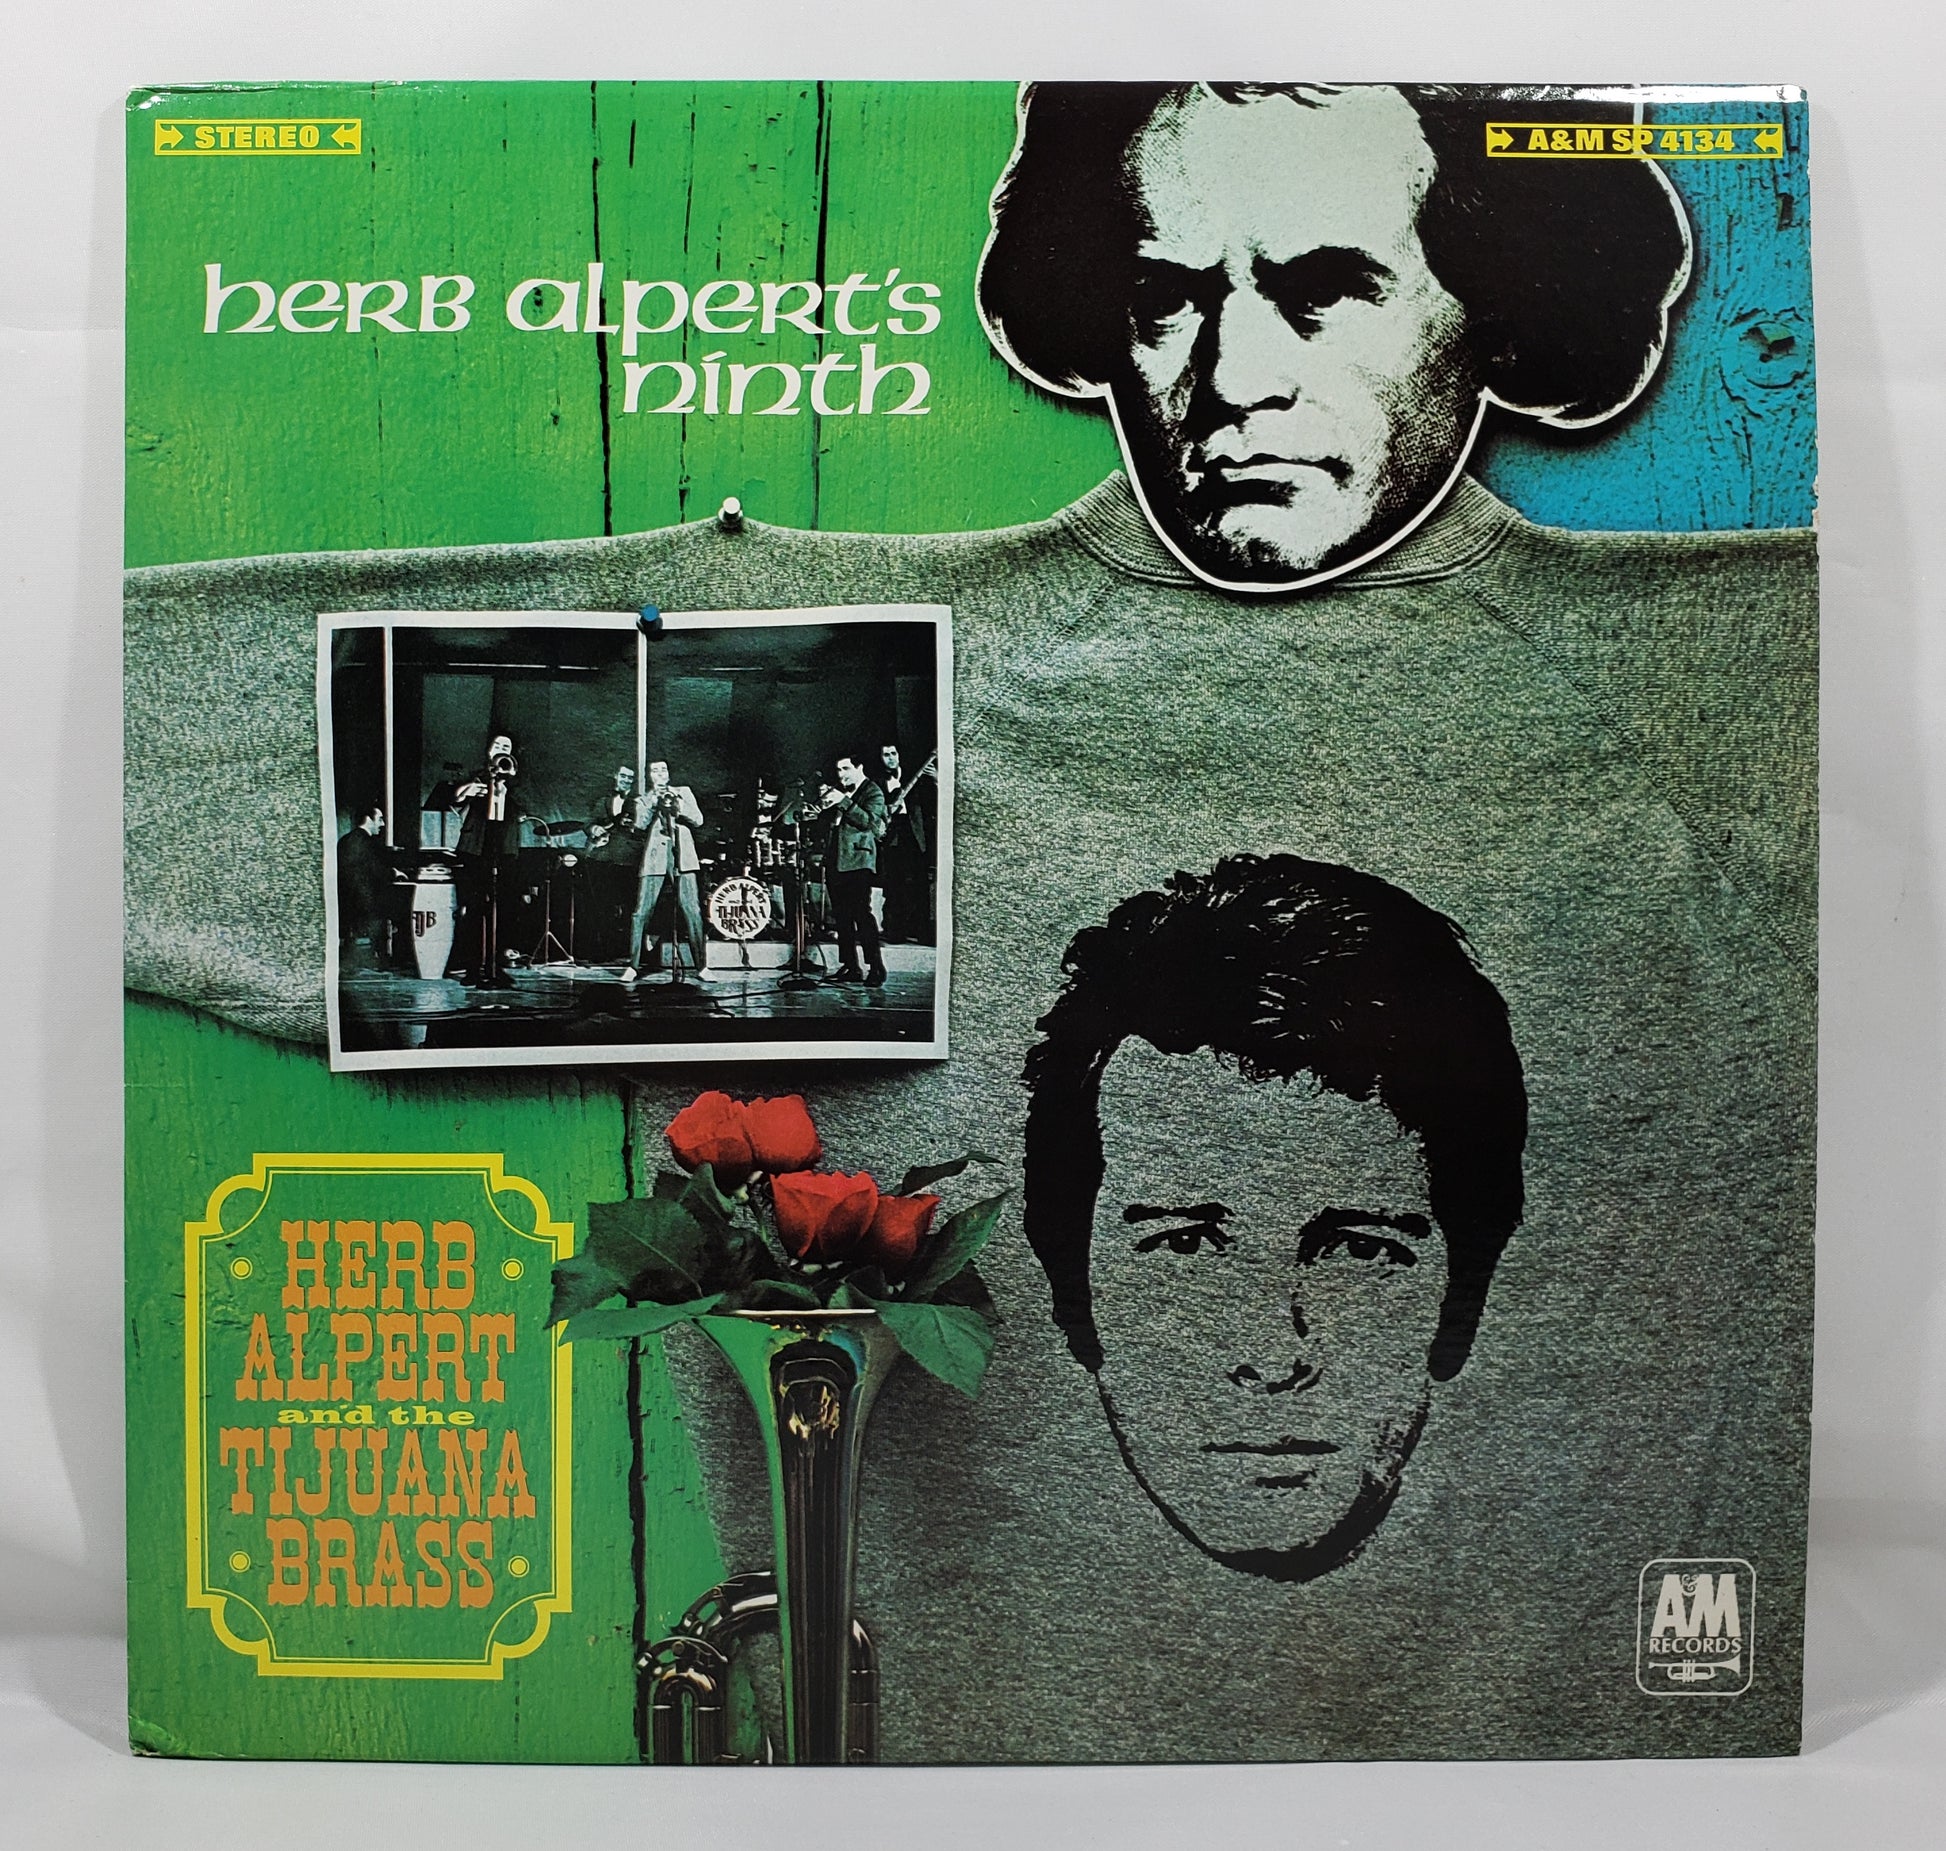 Herb Alpert and the Tijuana Brass - Herb Alpert's Ninth [Vinyl Record LP]